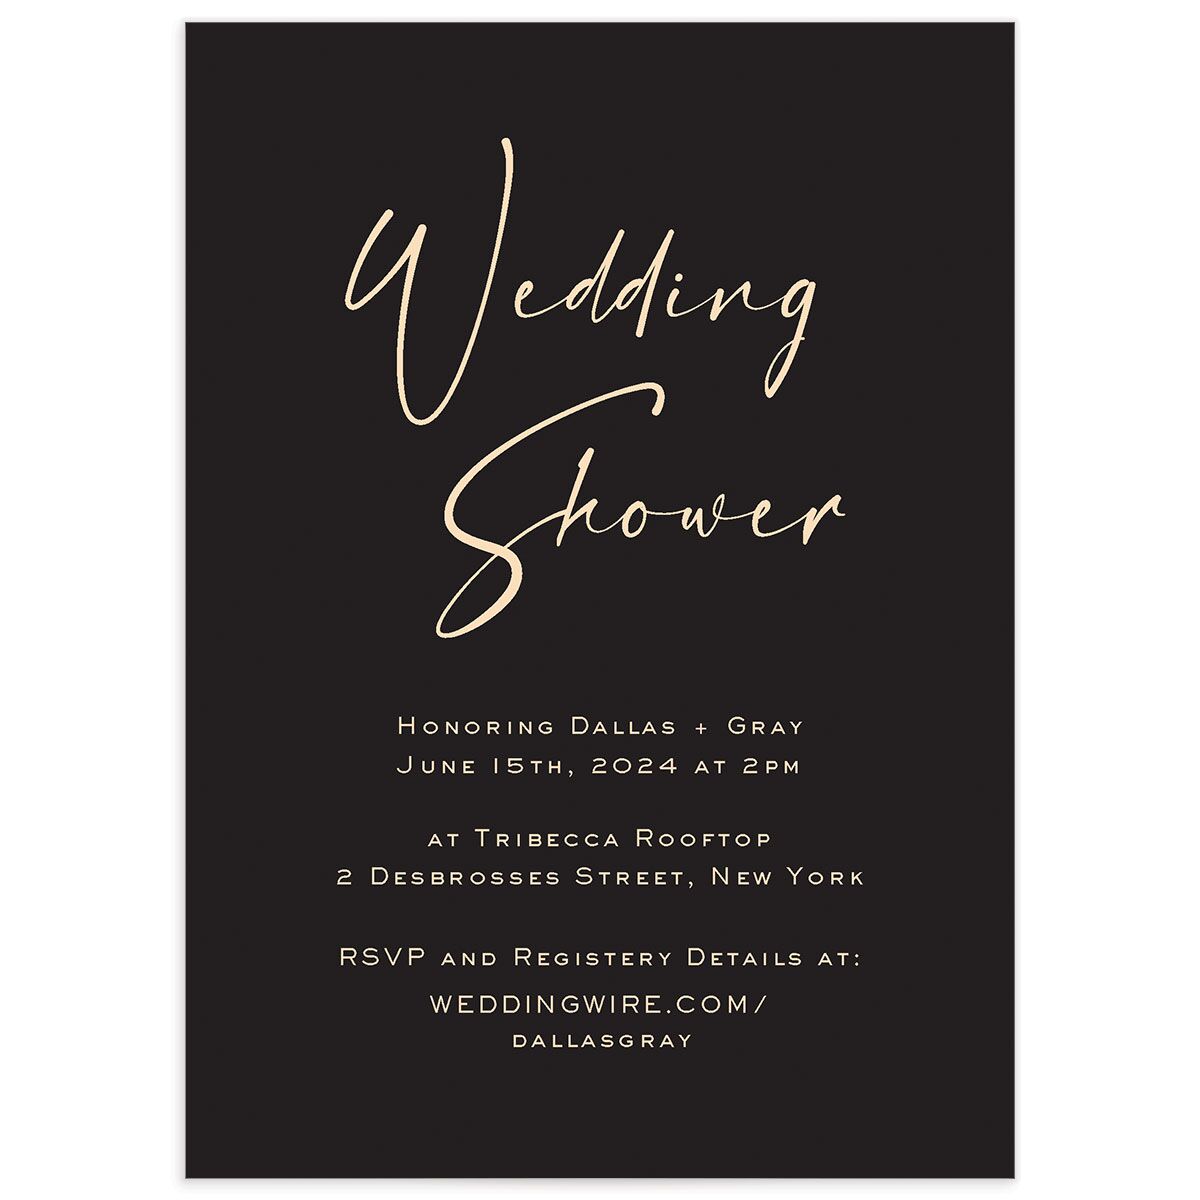 Delicate Flourish Bridal Shower Invitations [object Object] in Black